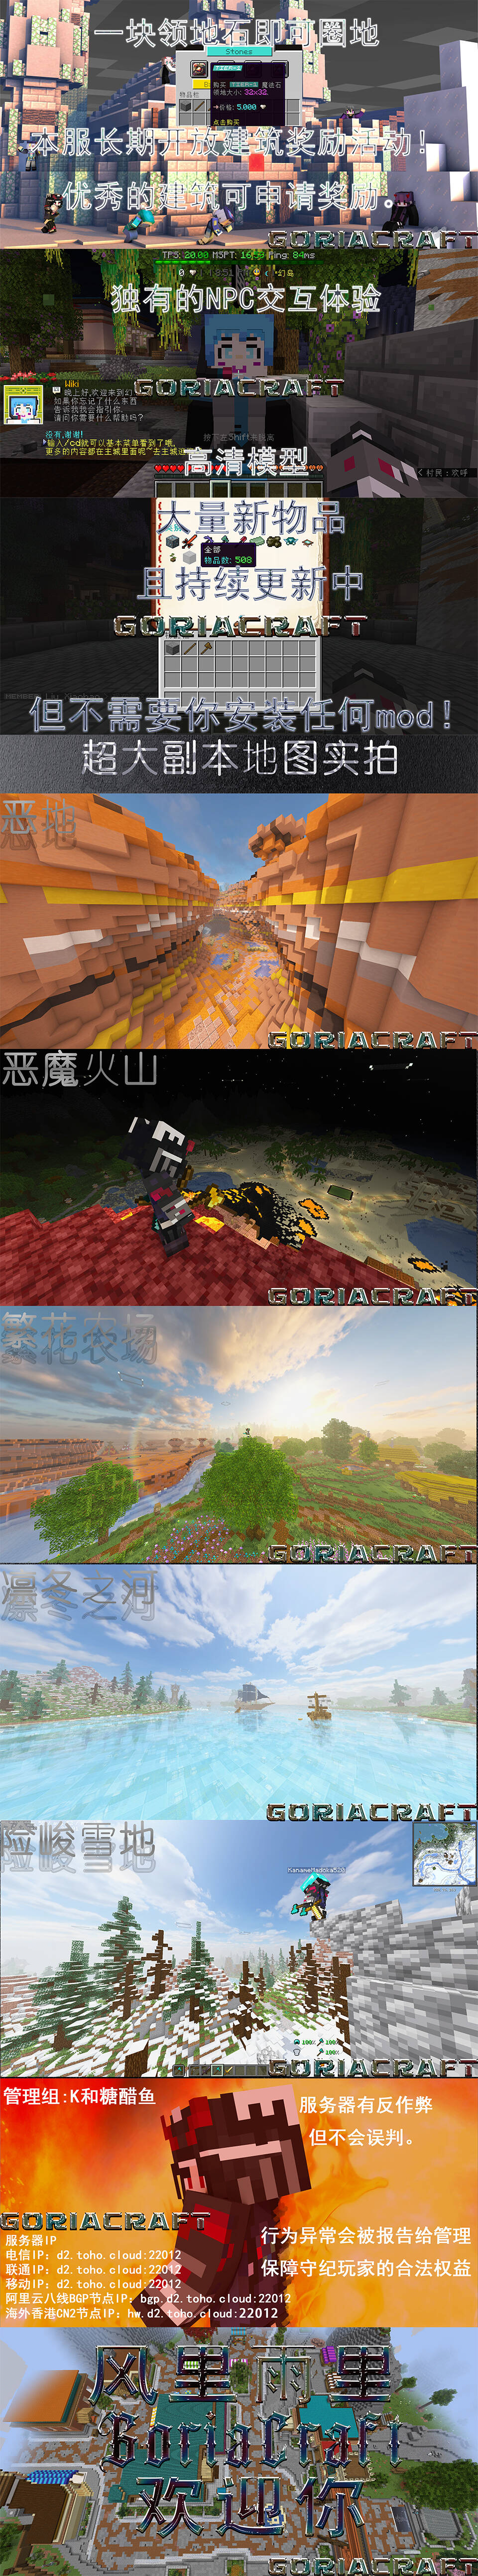 GoriaCraft宣传图长条版2-BY 糖醋鱼.jpg